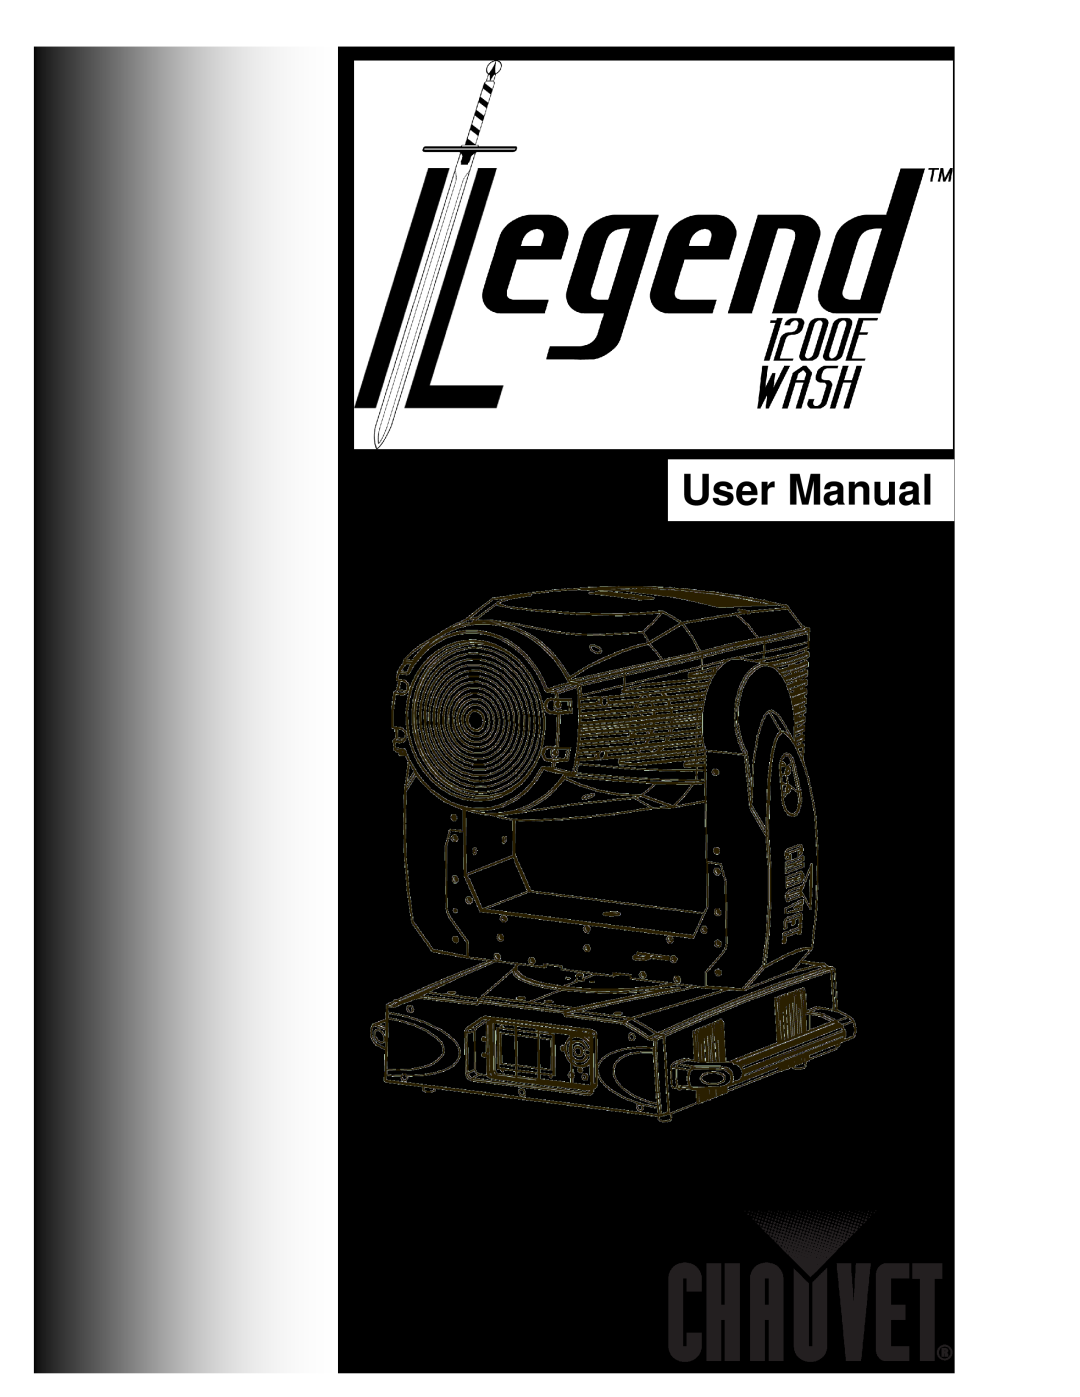 Chauvet 1200E user manual 